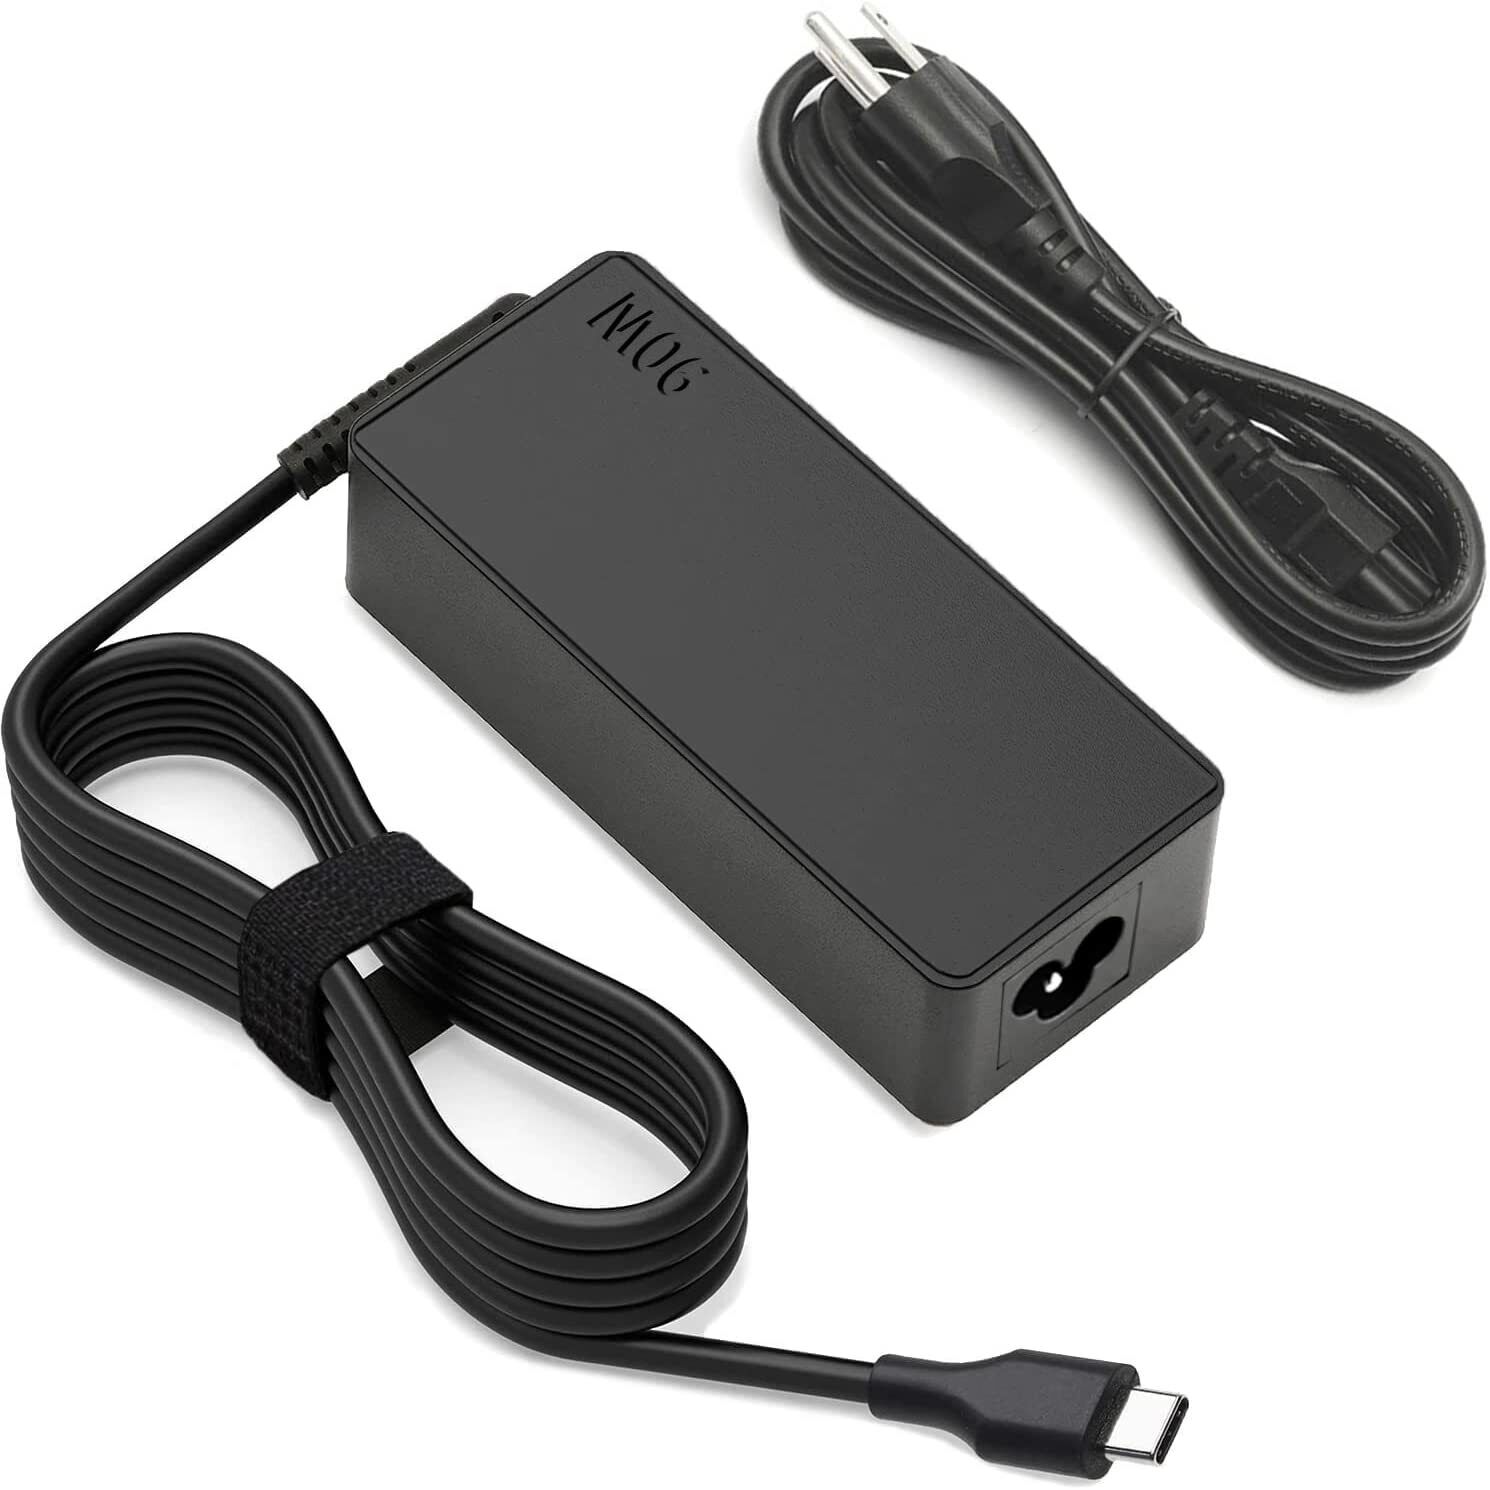 90W USB C Charger for Lenovo E480 E485 E540 E550 E580 E585 E590 Yoga Flex 11 11e